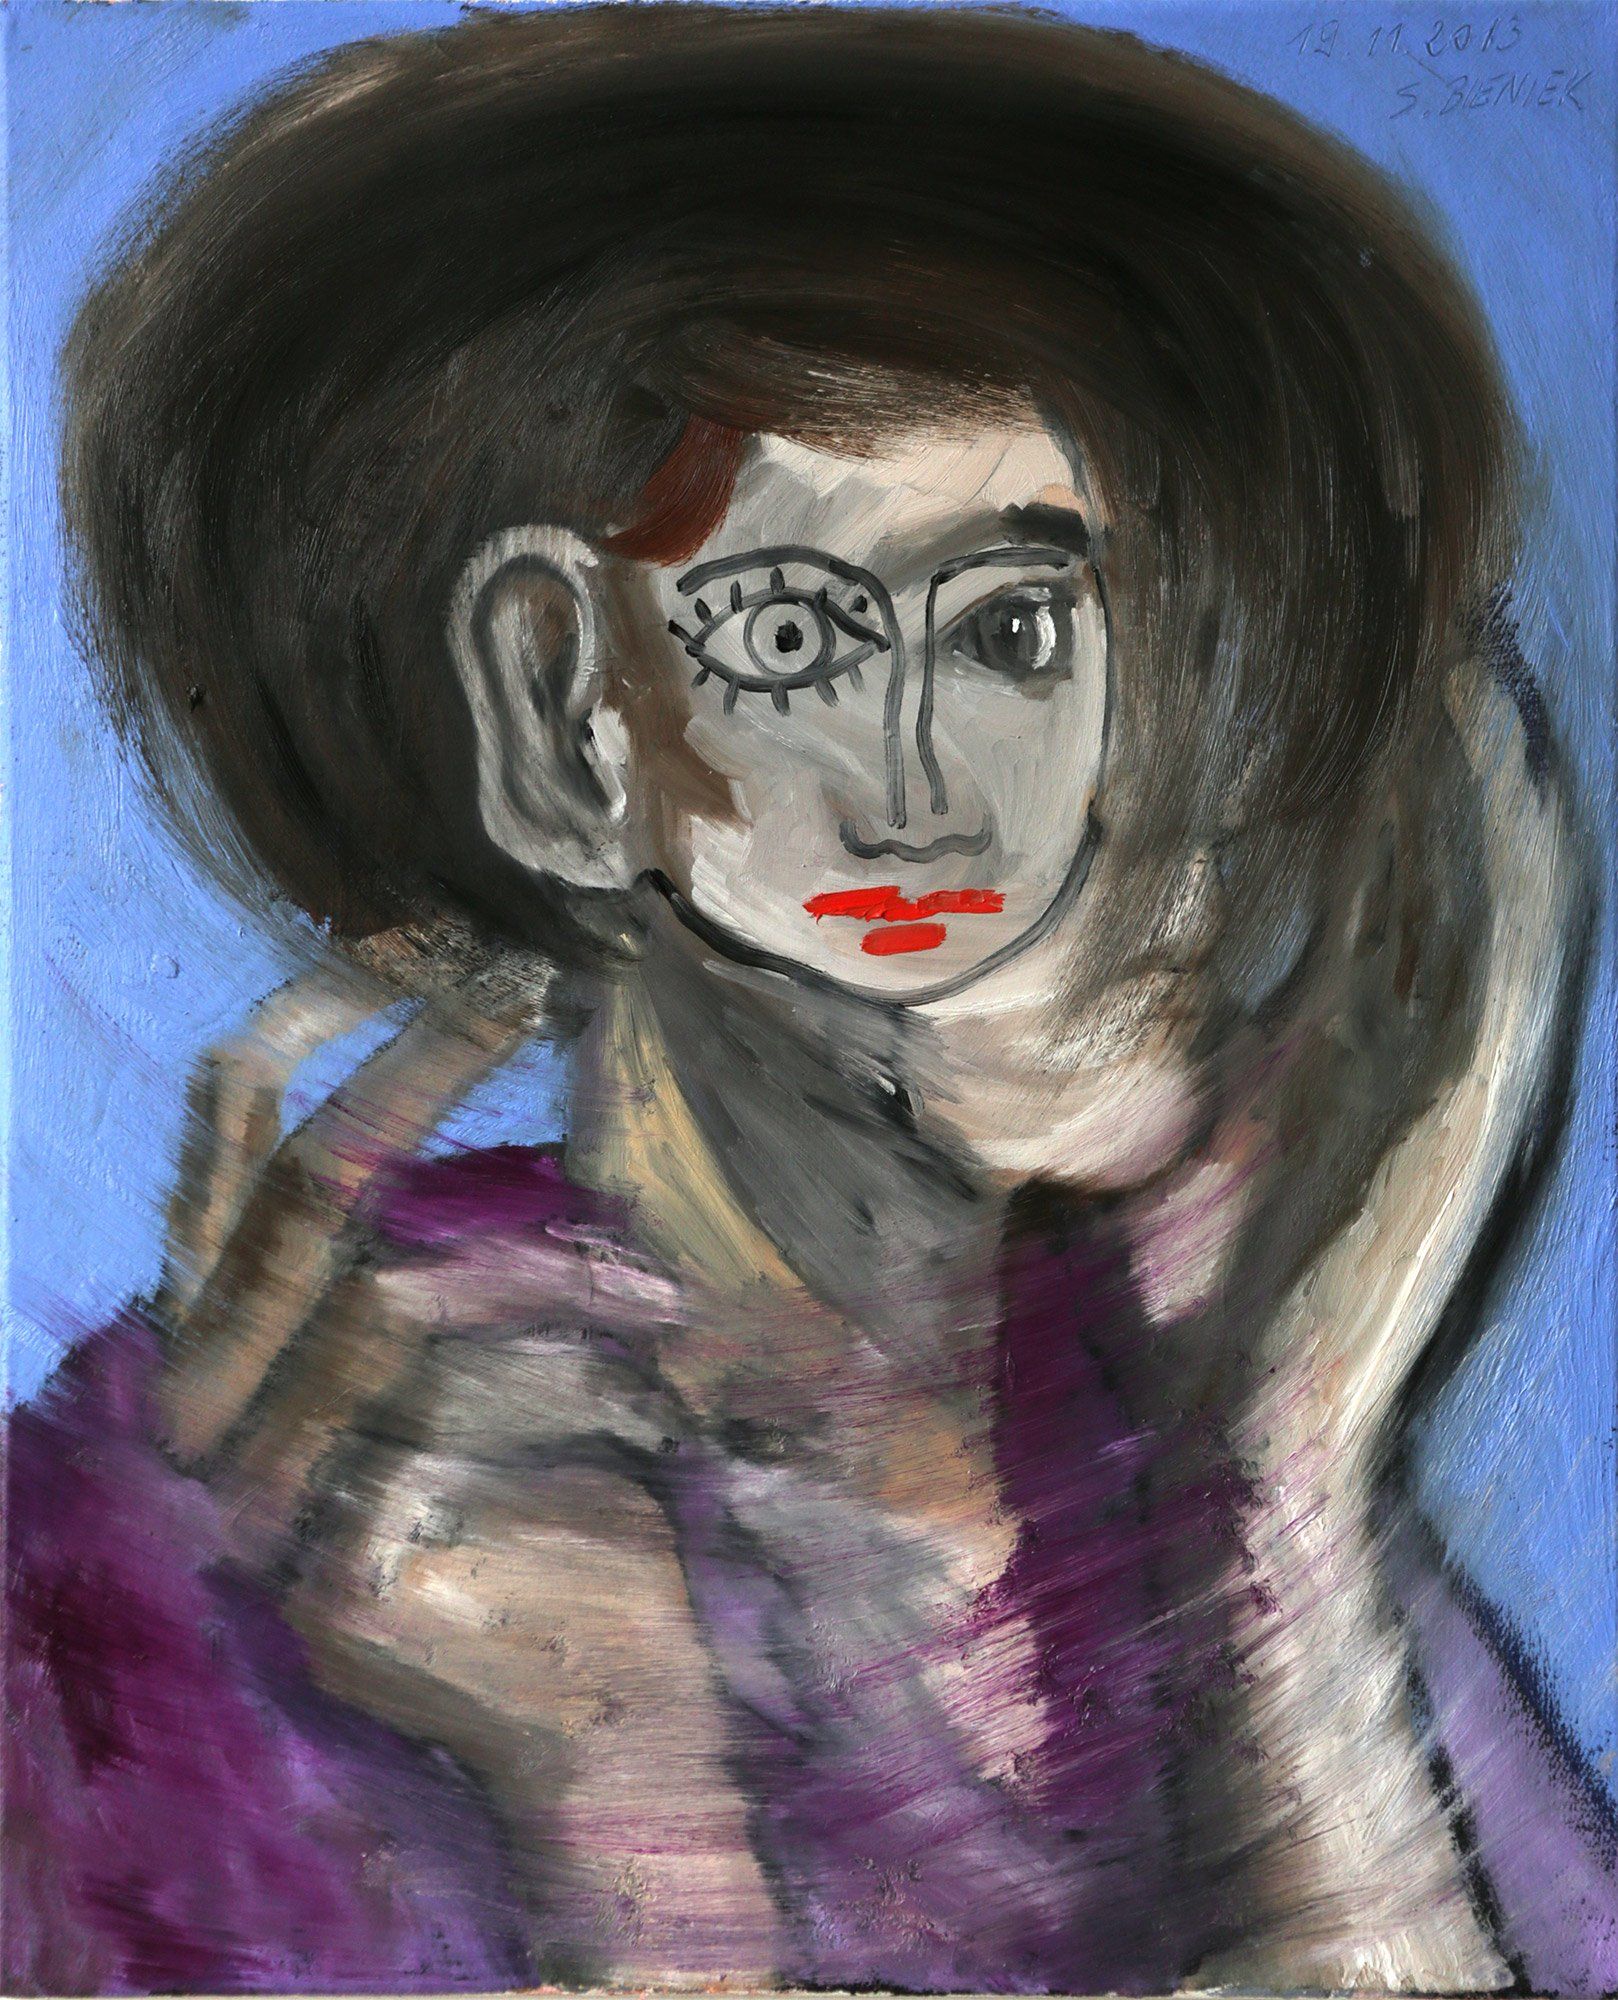 „Two-Faced No. 1“ by Sebastian Bieniek (B1EN1EK), 2013. Oil on canvas, 55 cm. x 45 cm. From the oeuvre of BieniekFace painting.